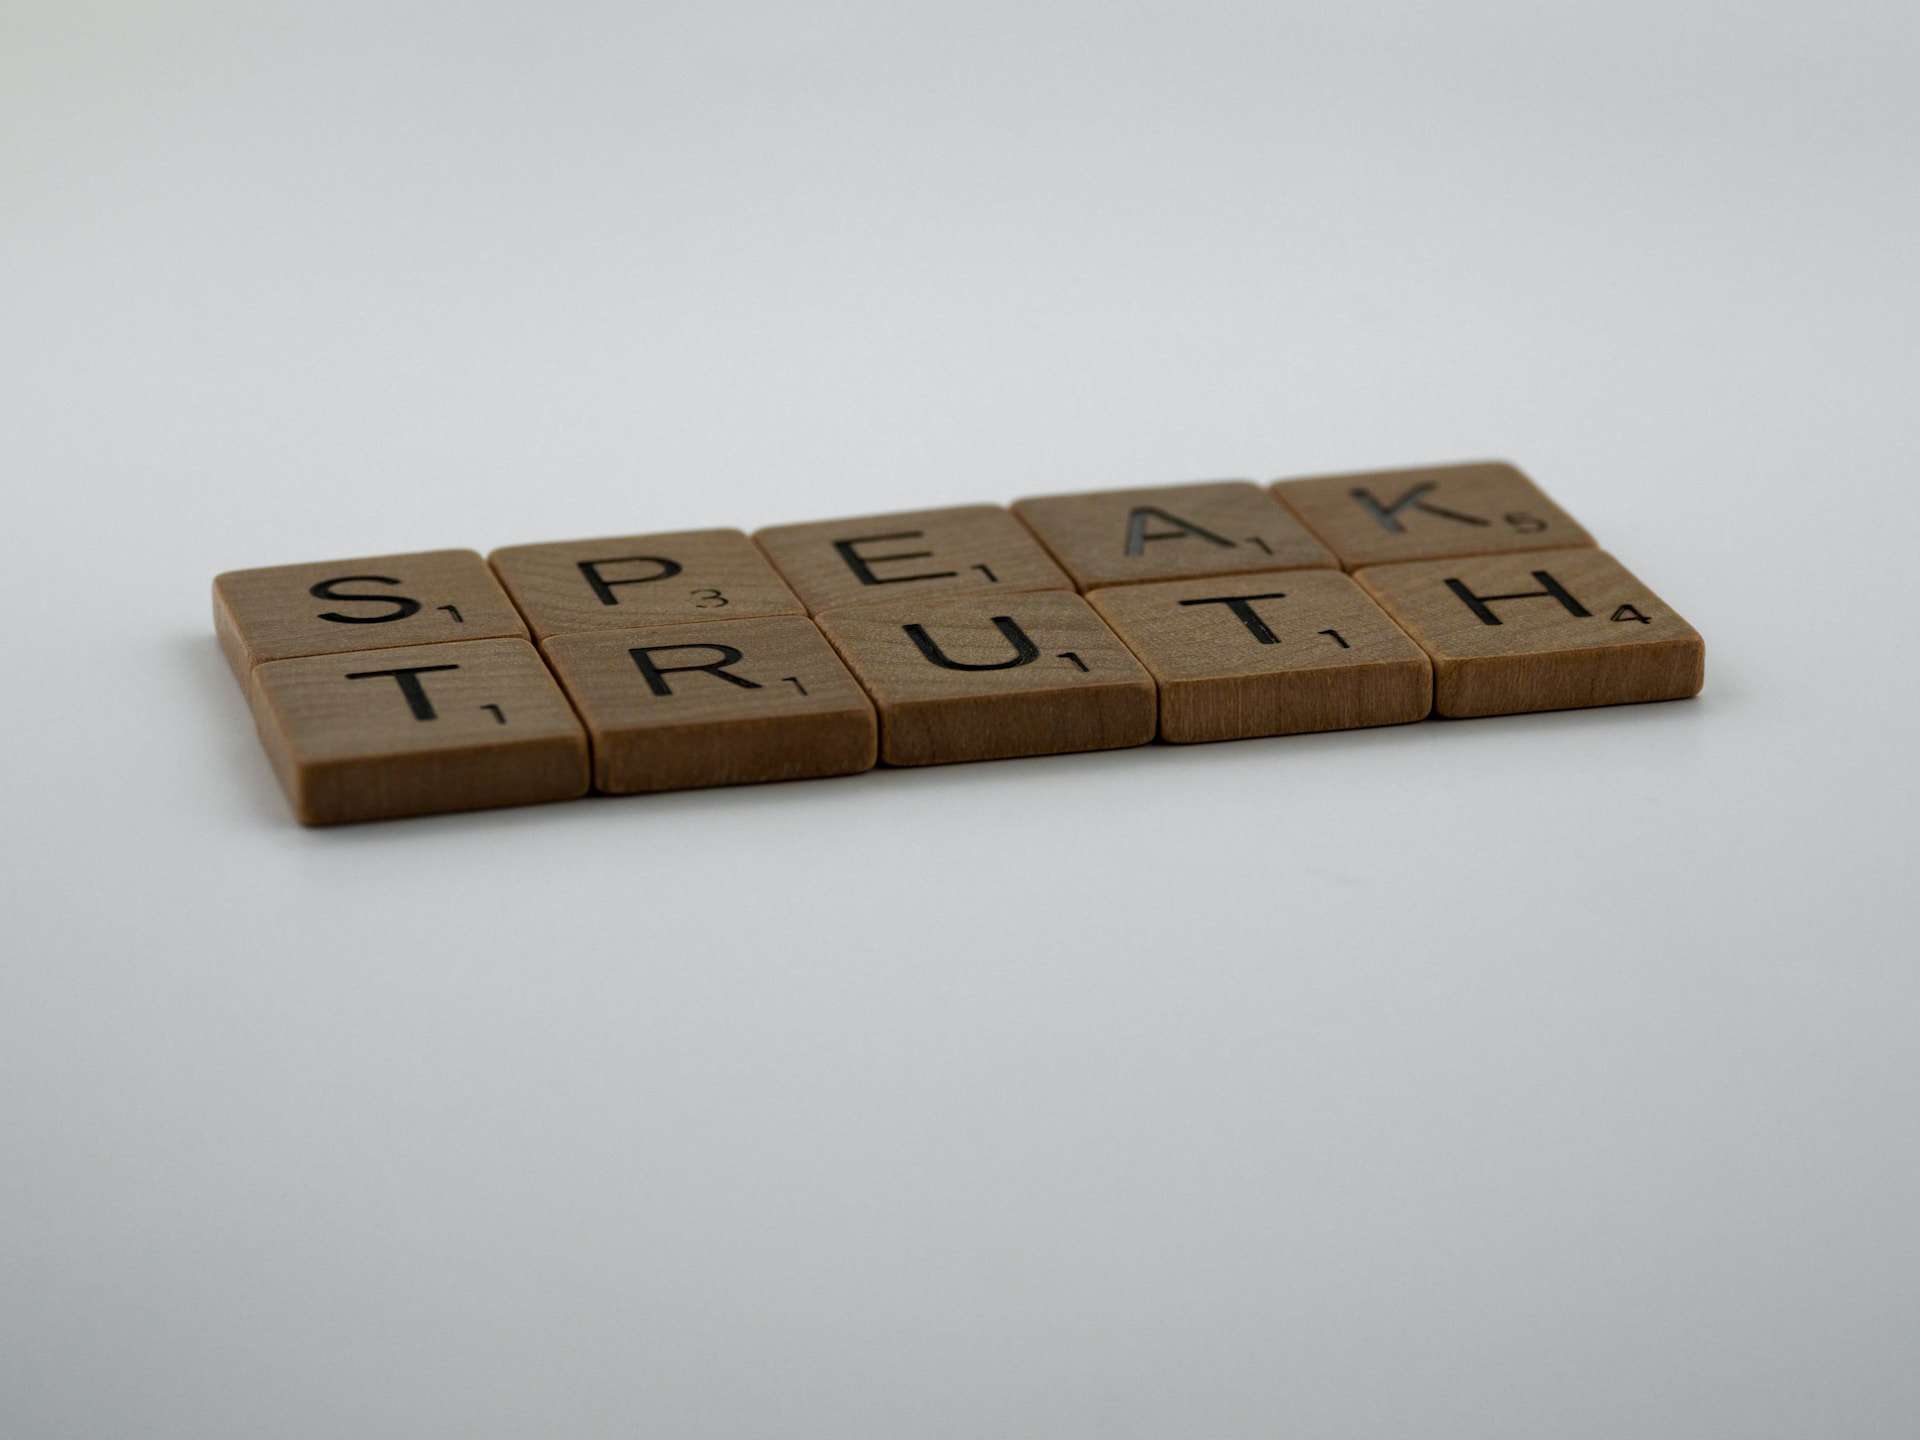 Speak truth scrabble letters